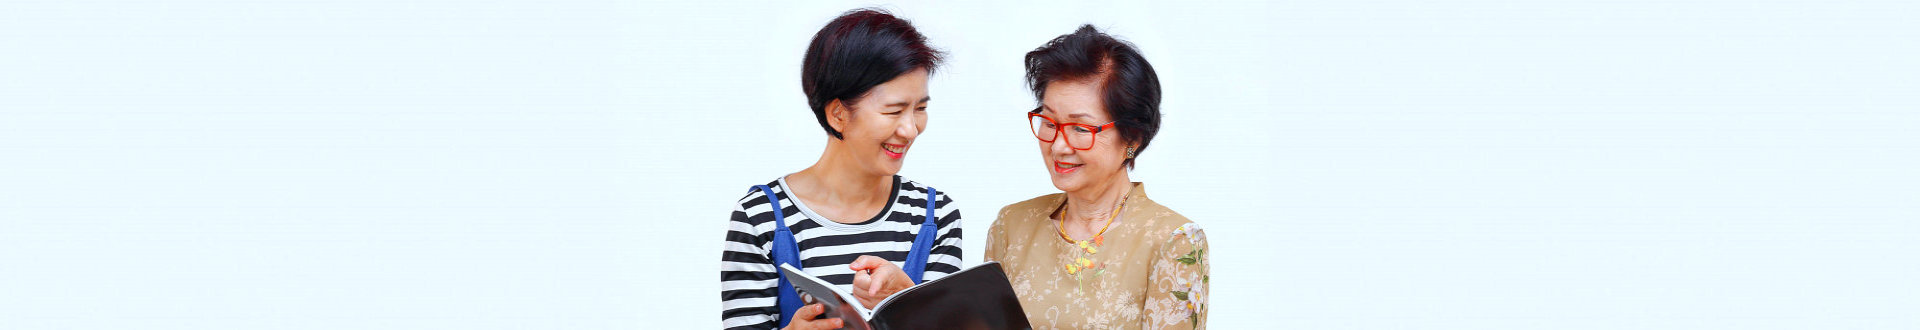 caregiver reading a senior woman's bok